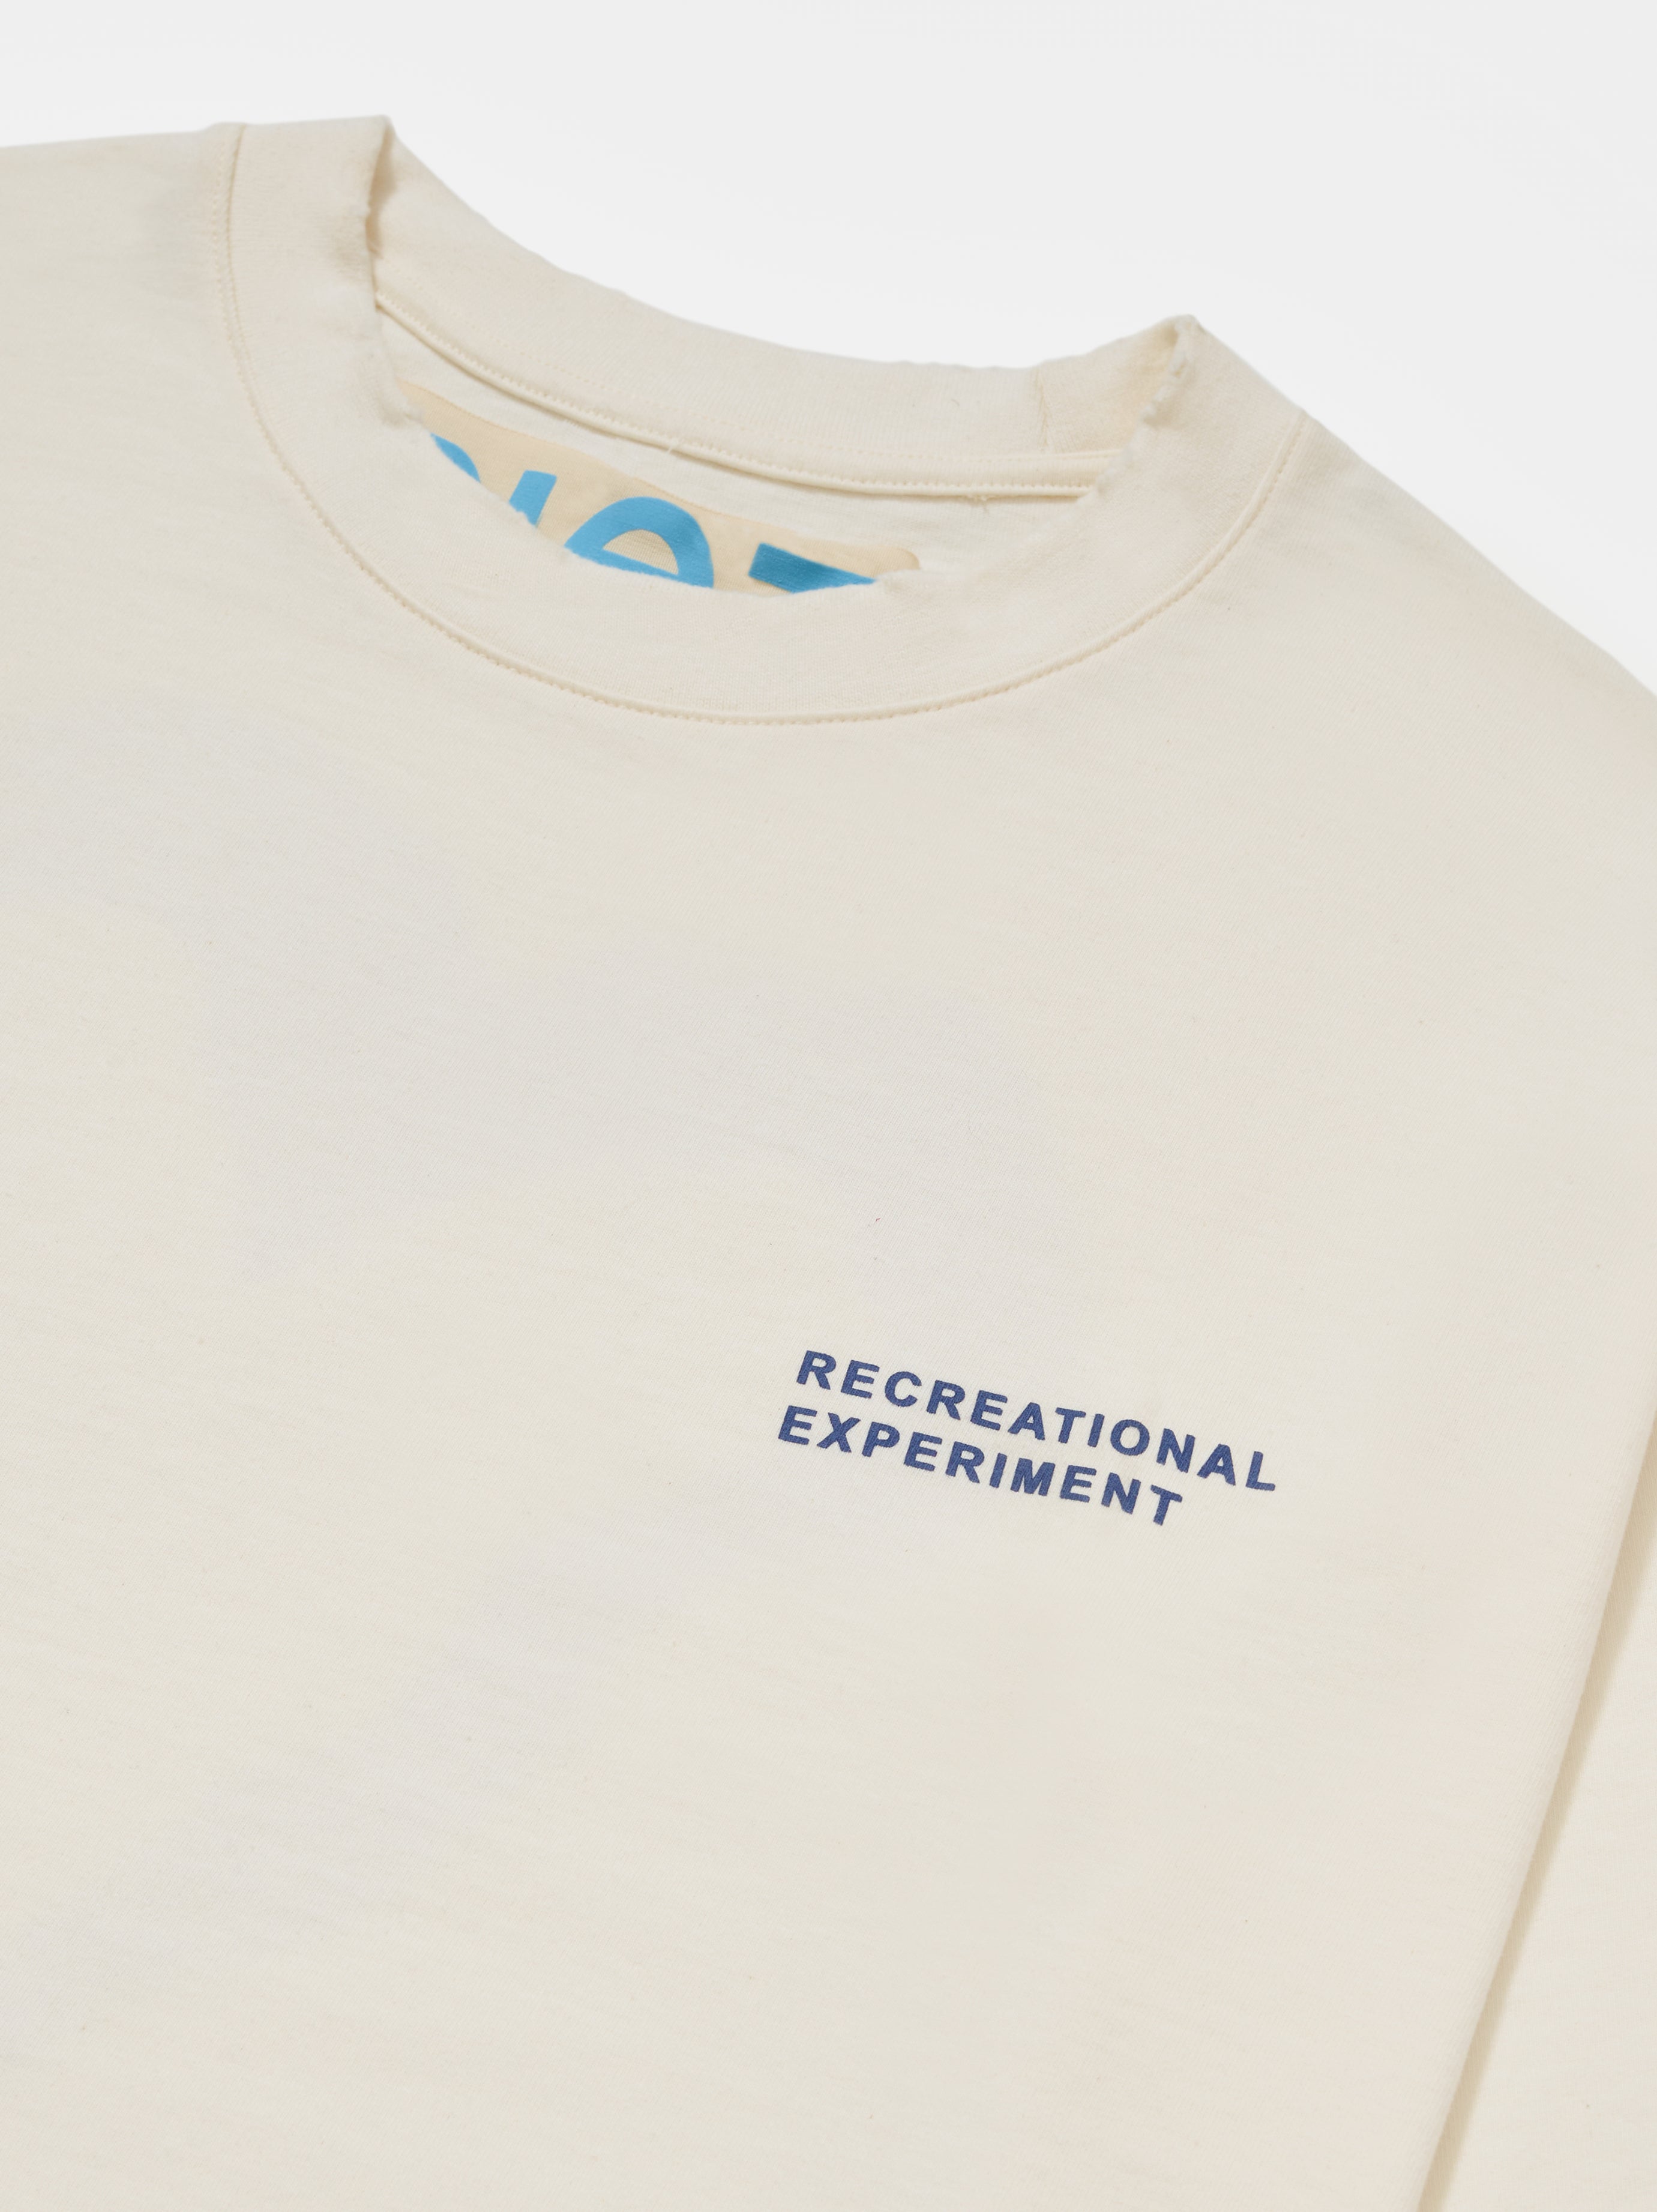 Recreational Experiment Gem T-Shirt - Bone White